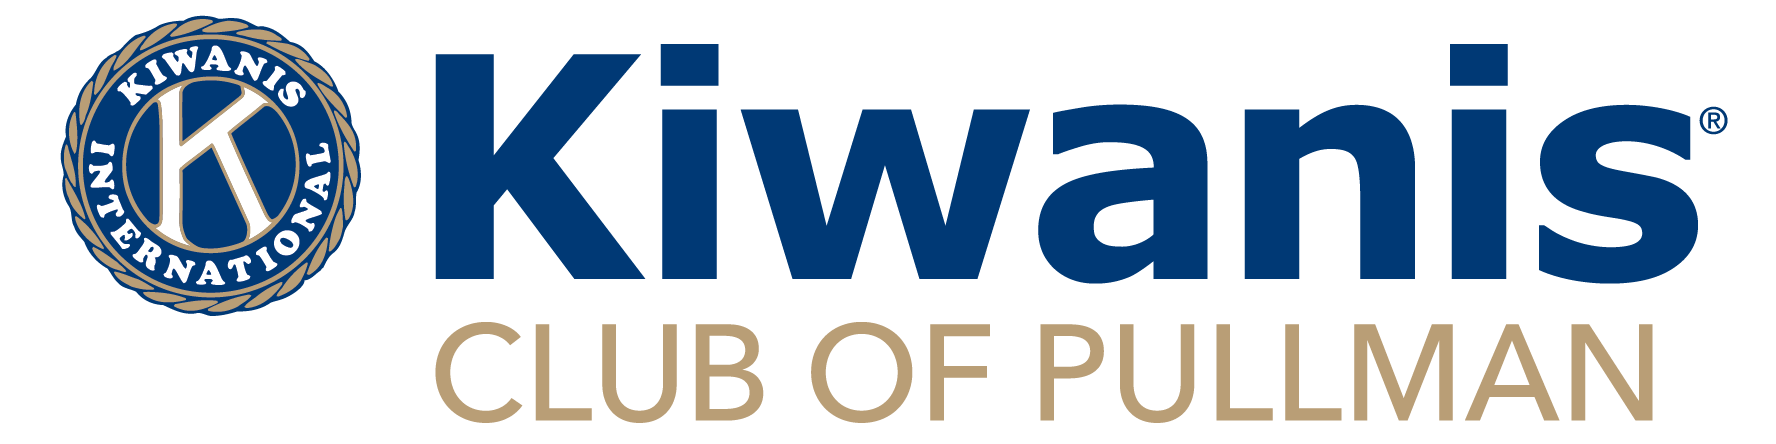 Kiwanis Club of Pullman